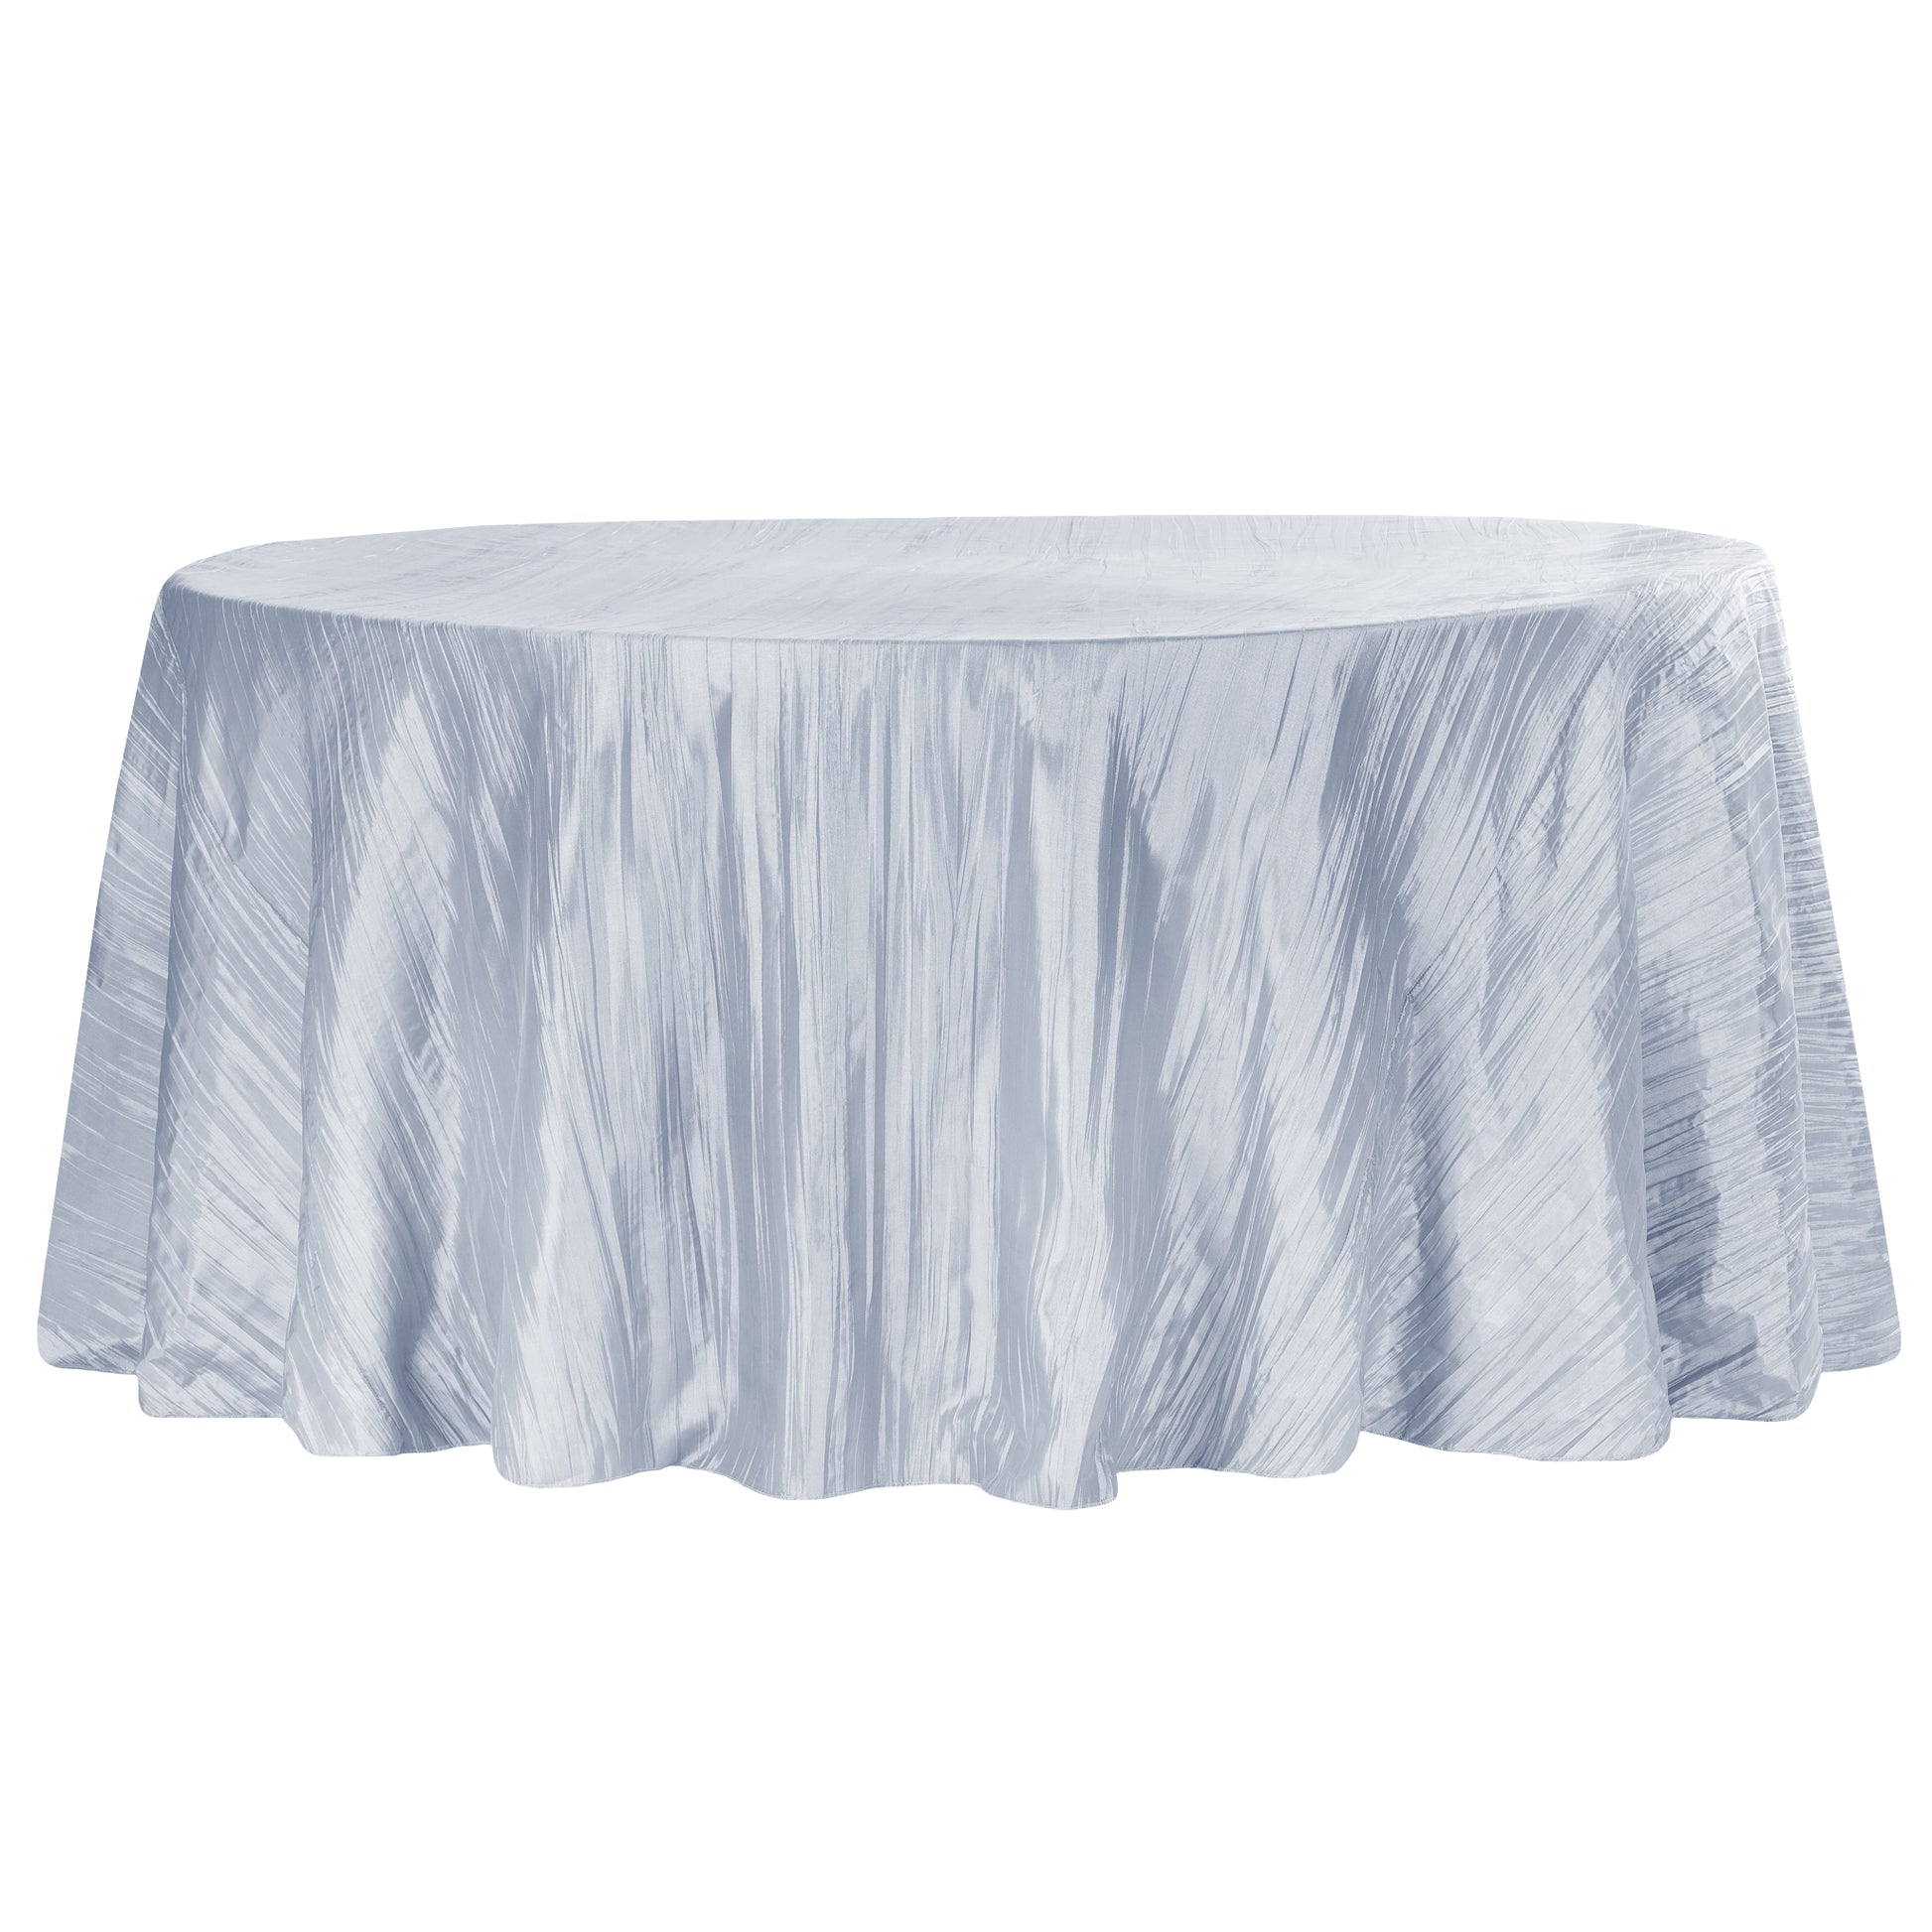 Accordion Crinkle Taffeta 120" Round Tablecloth - Dusty Blue - CV Linens